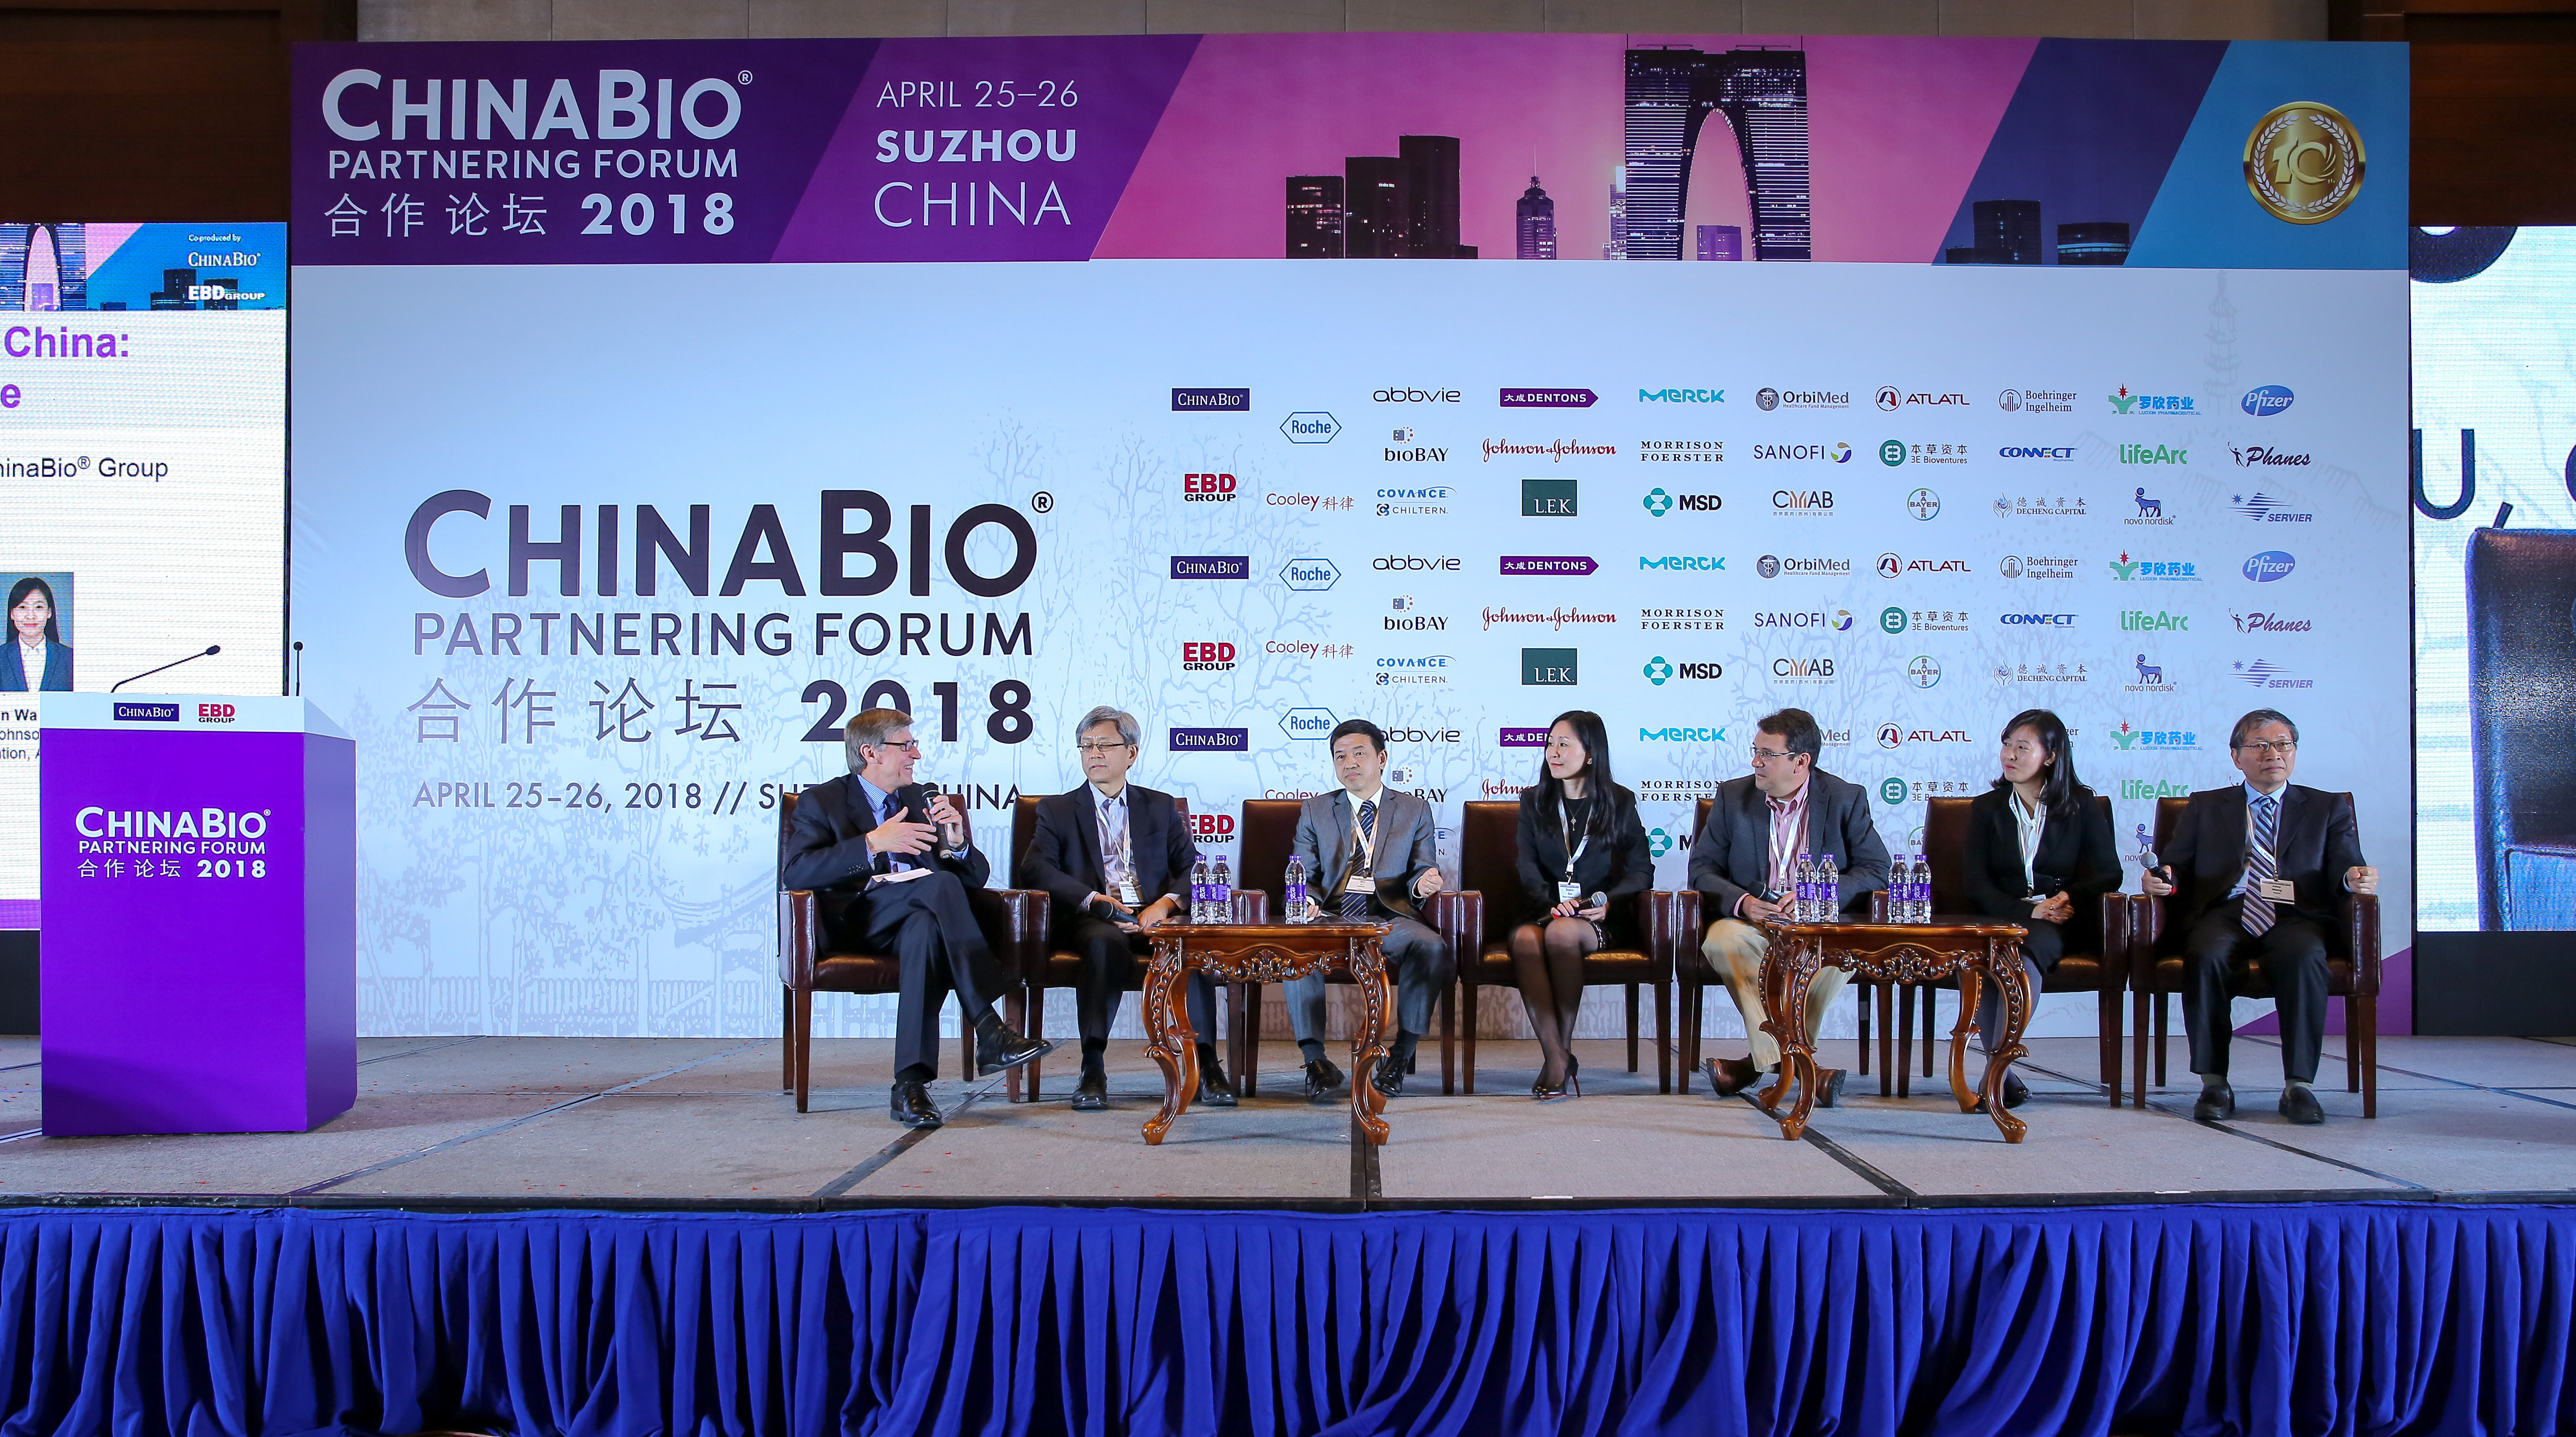 Chinabio partnering forum 2018